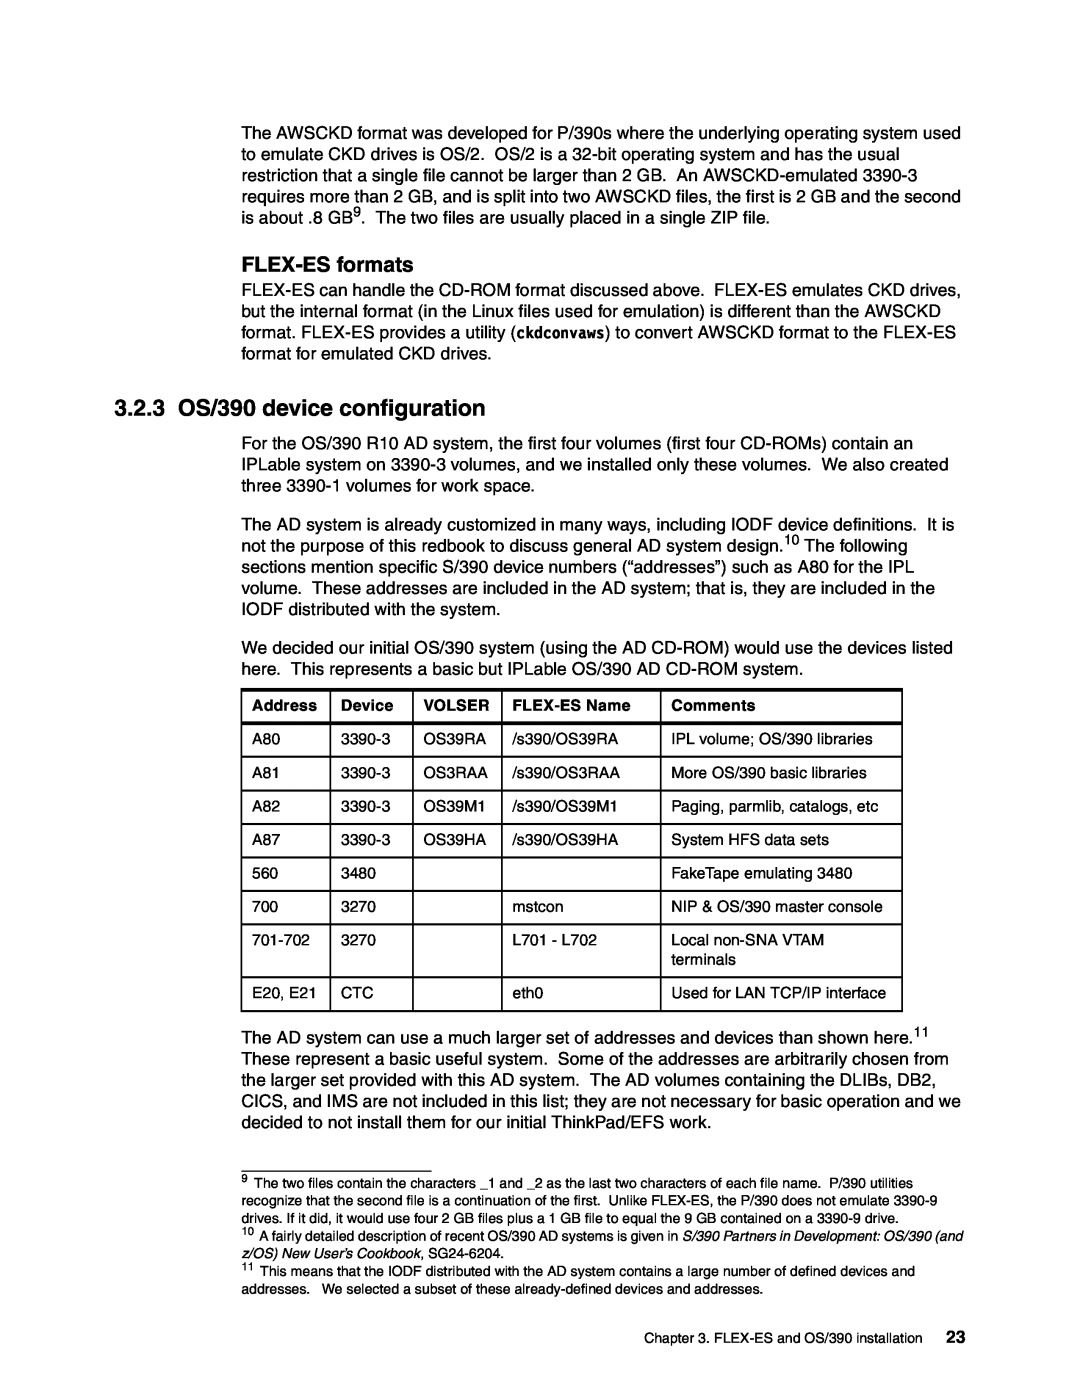 IBM s/390 manual 3.2.3 OS/390 device configuration, FLEX-ES formats 